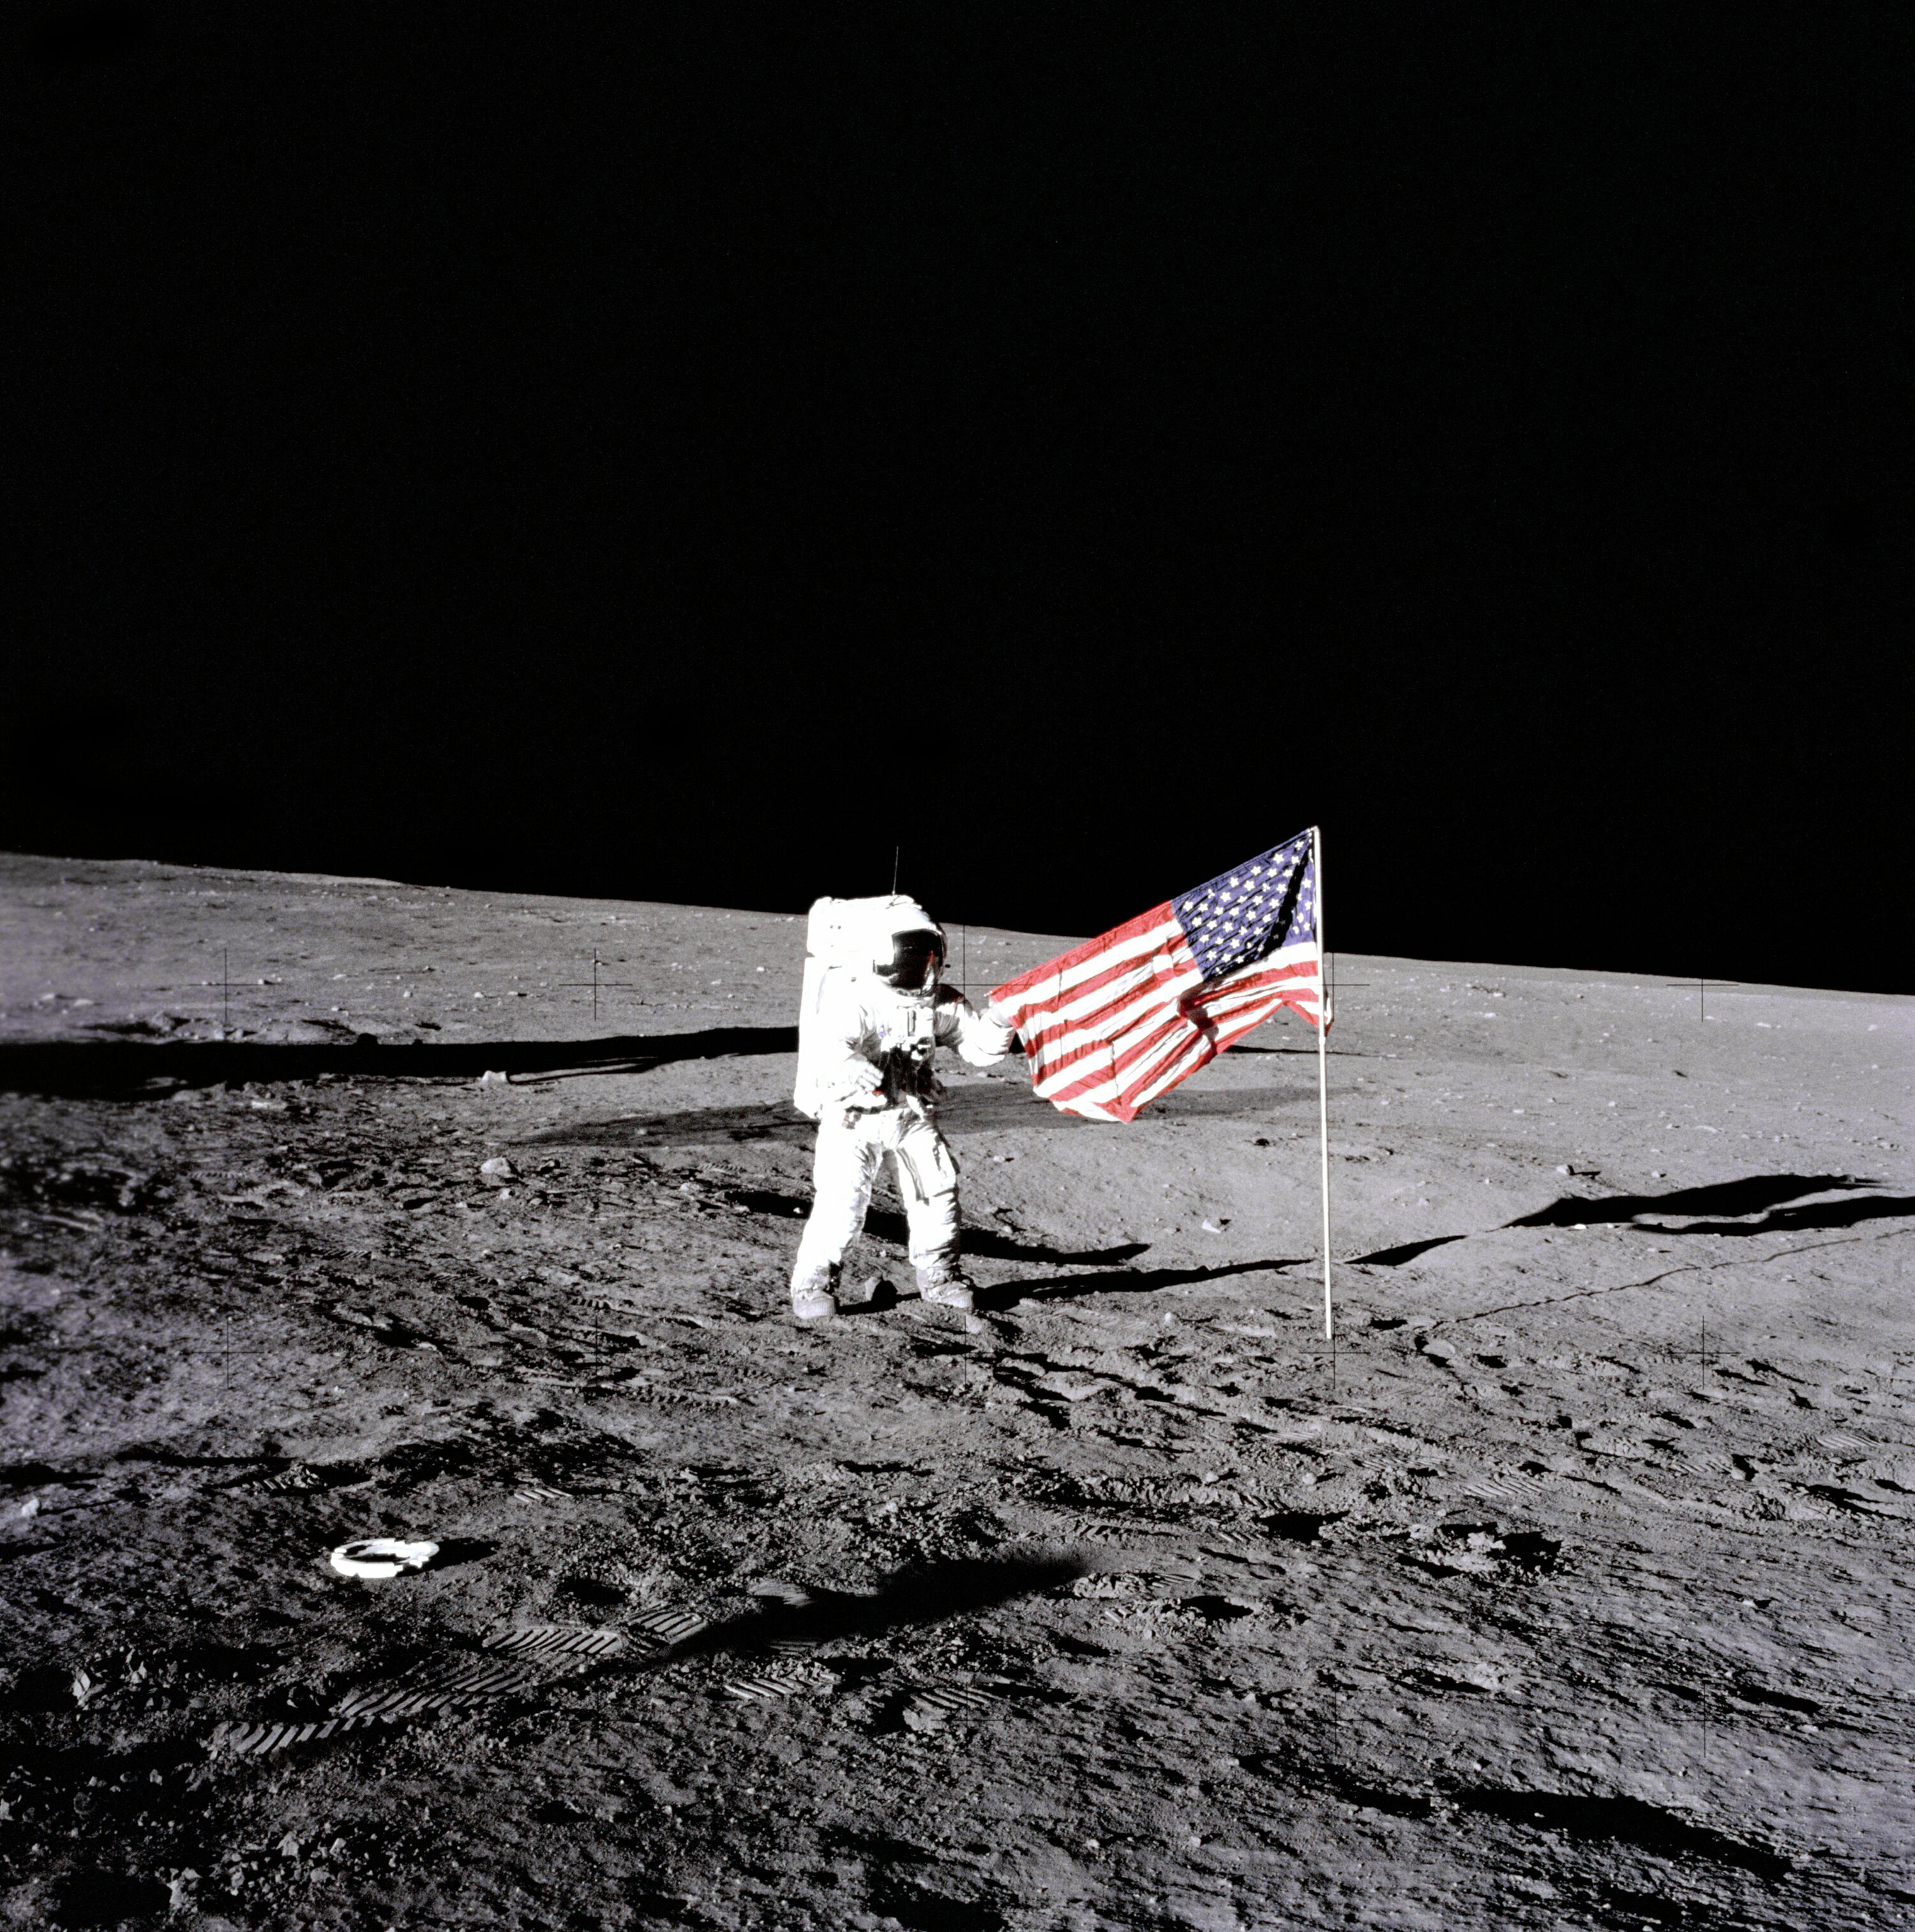 Американцы на луне. Нил Армстронг на Луне. Нил Армстронг полет на луну. Нил Армстронг на Луне 1969. 1969 Первый человек на Луне.